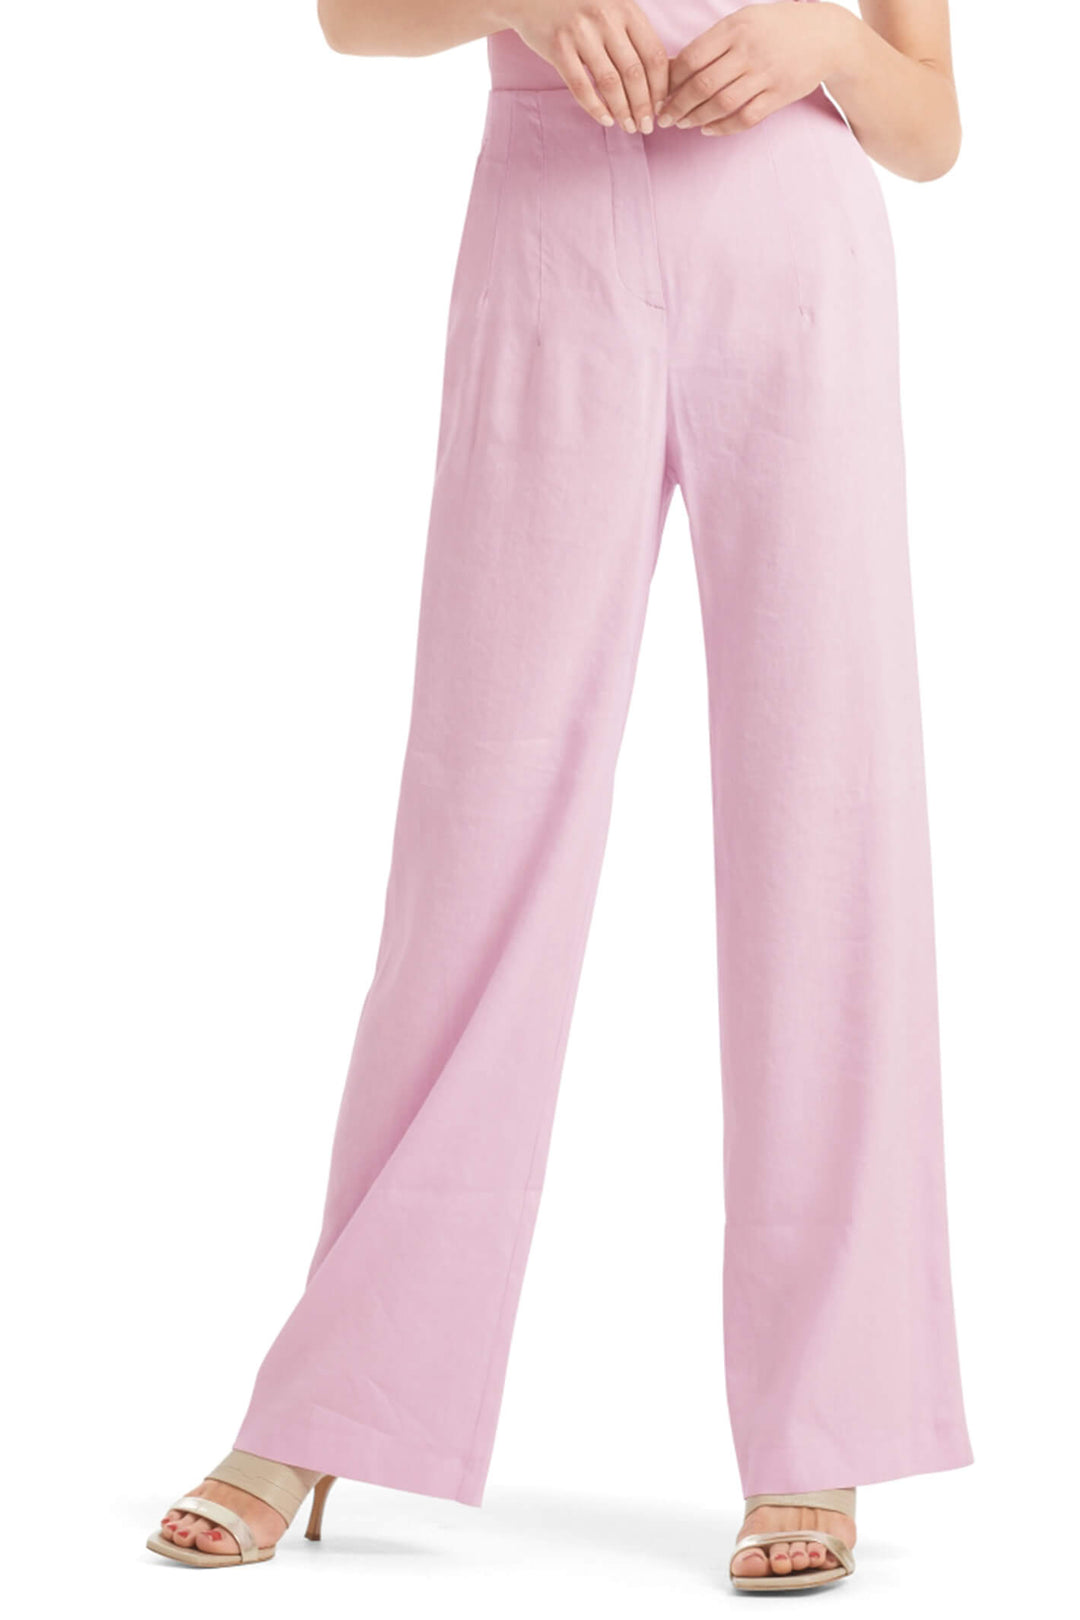 Marc Cain QC 81.42 W47 Pink Wide Leg Trousers - Olivia Grace Fashion